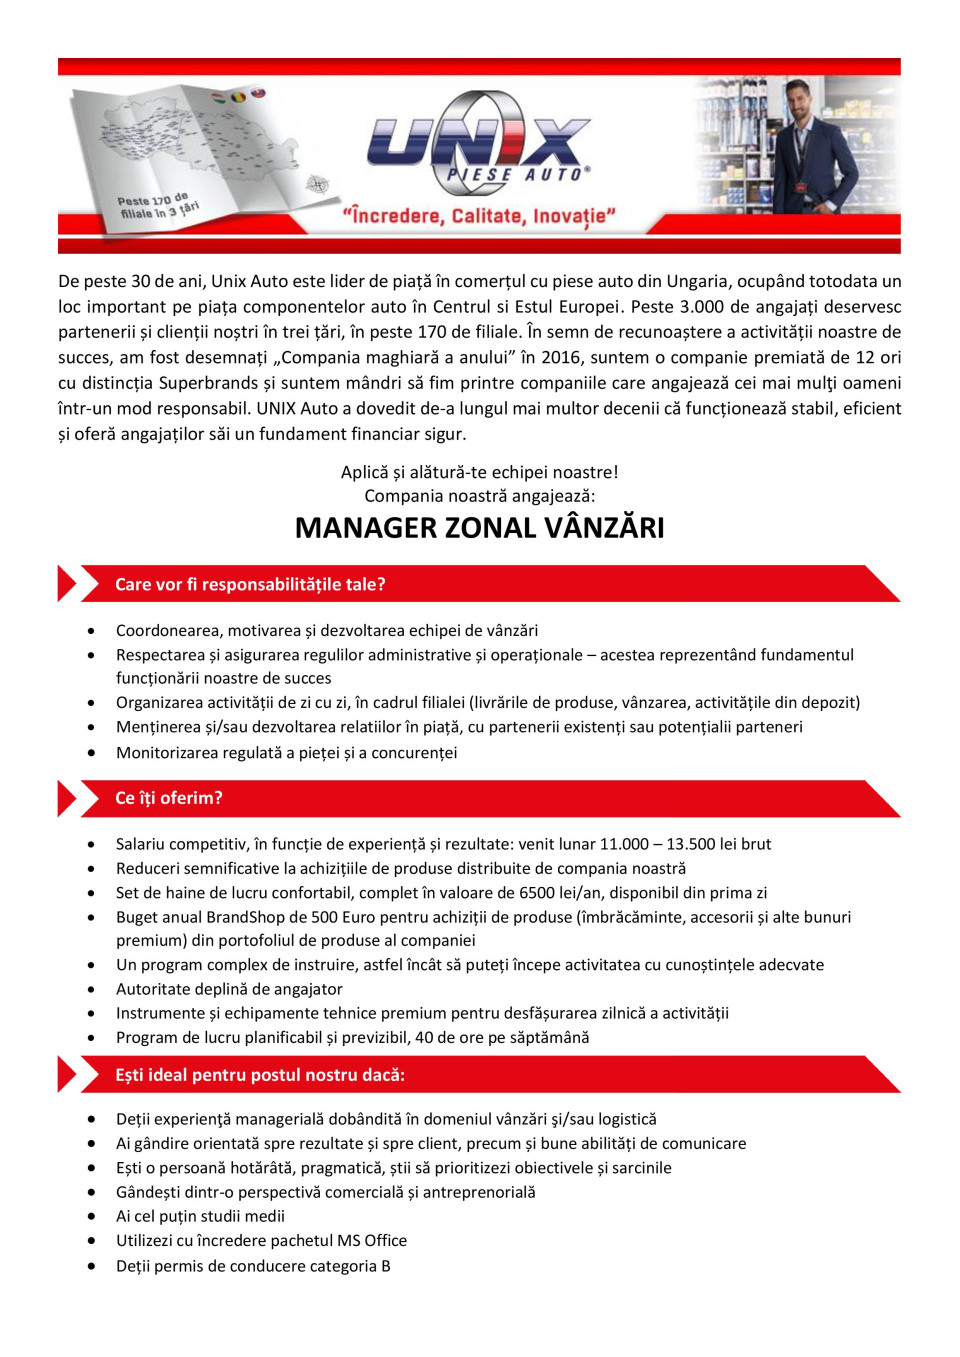 Manager Zonal Vanzari (venit lunar 14000 – 18000 Ron brut)